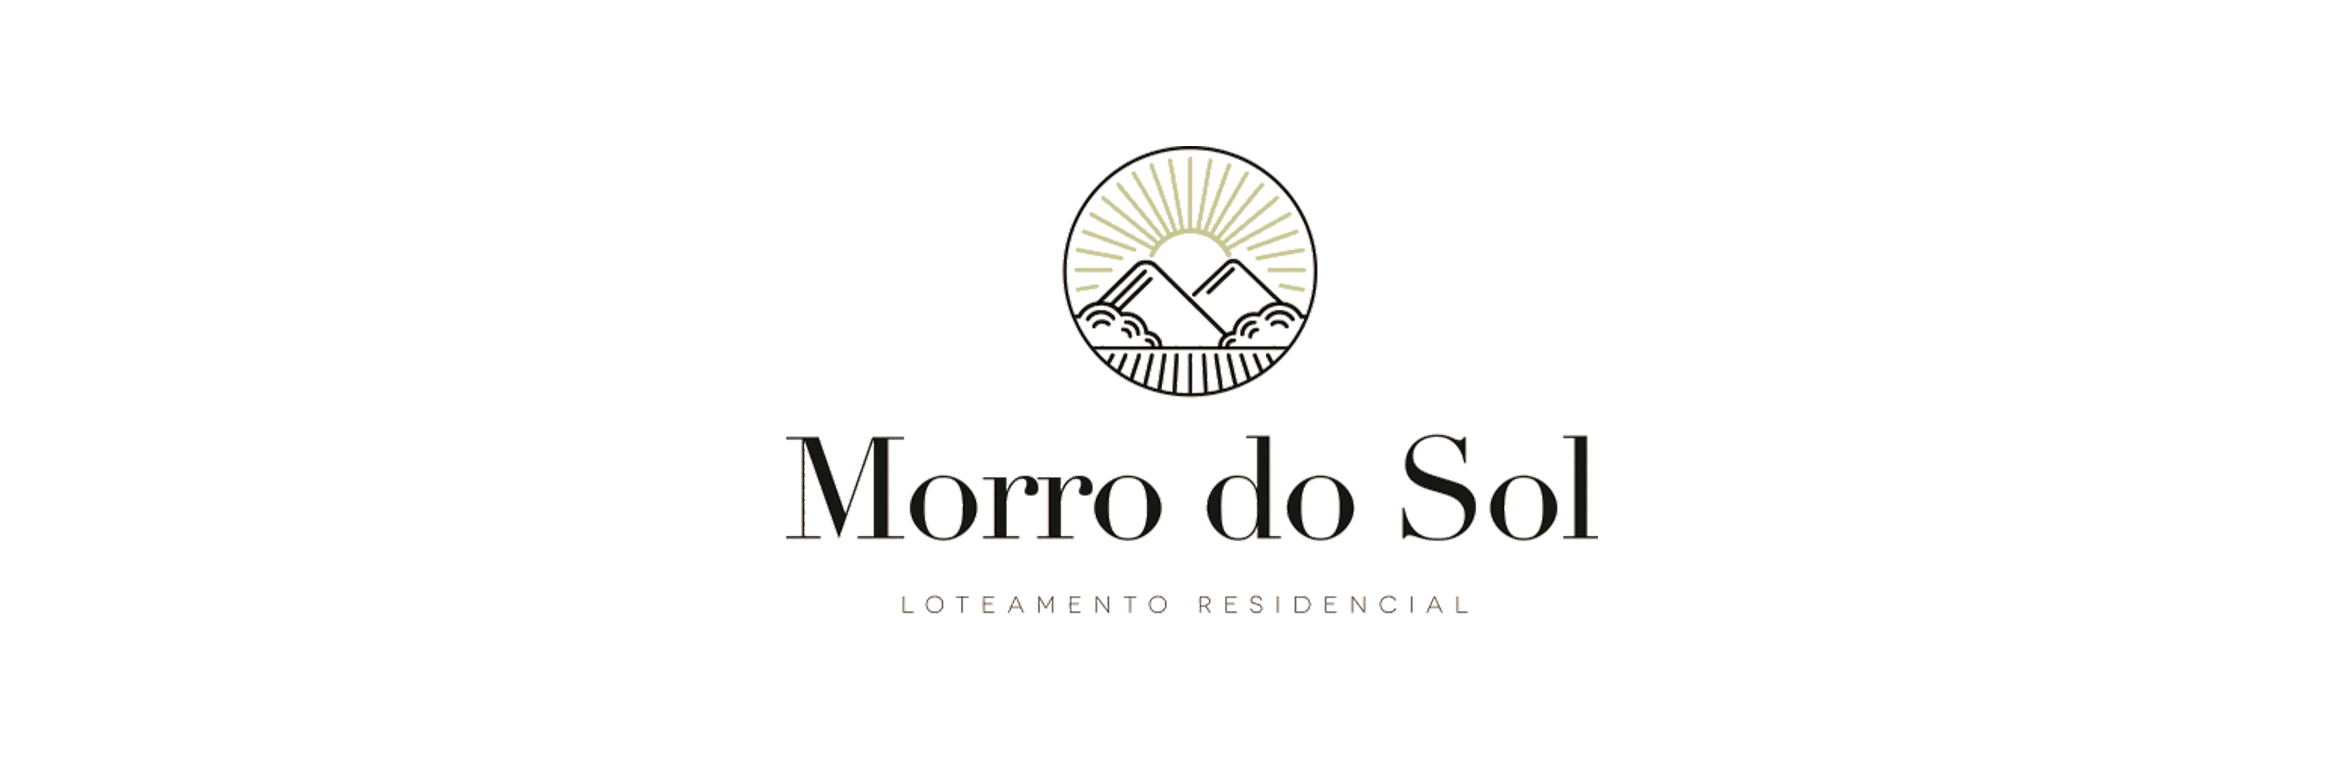 Residencial Morro Do Sol